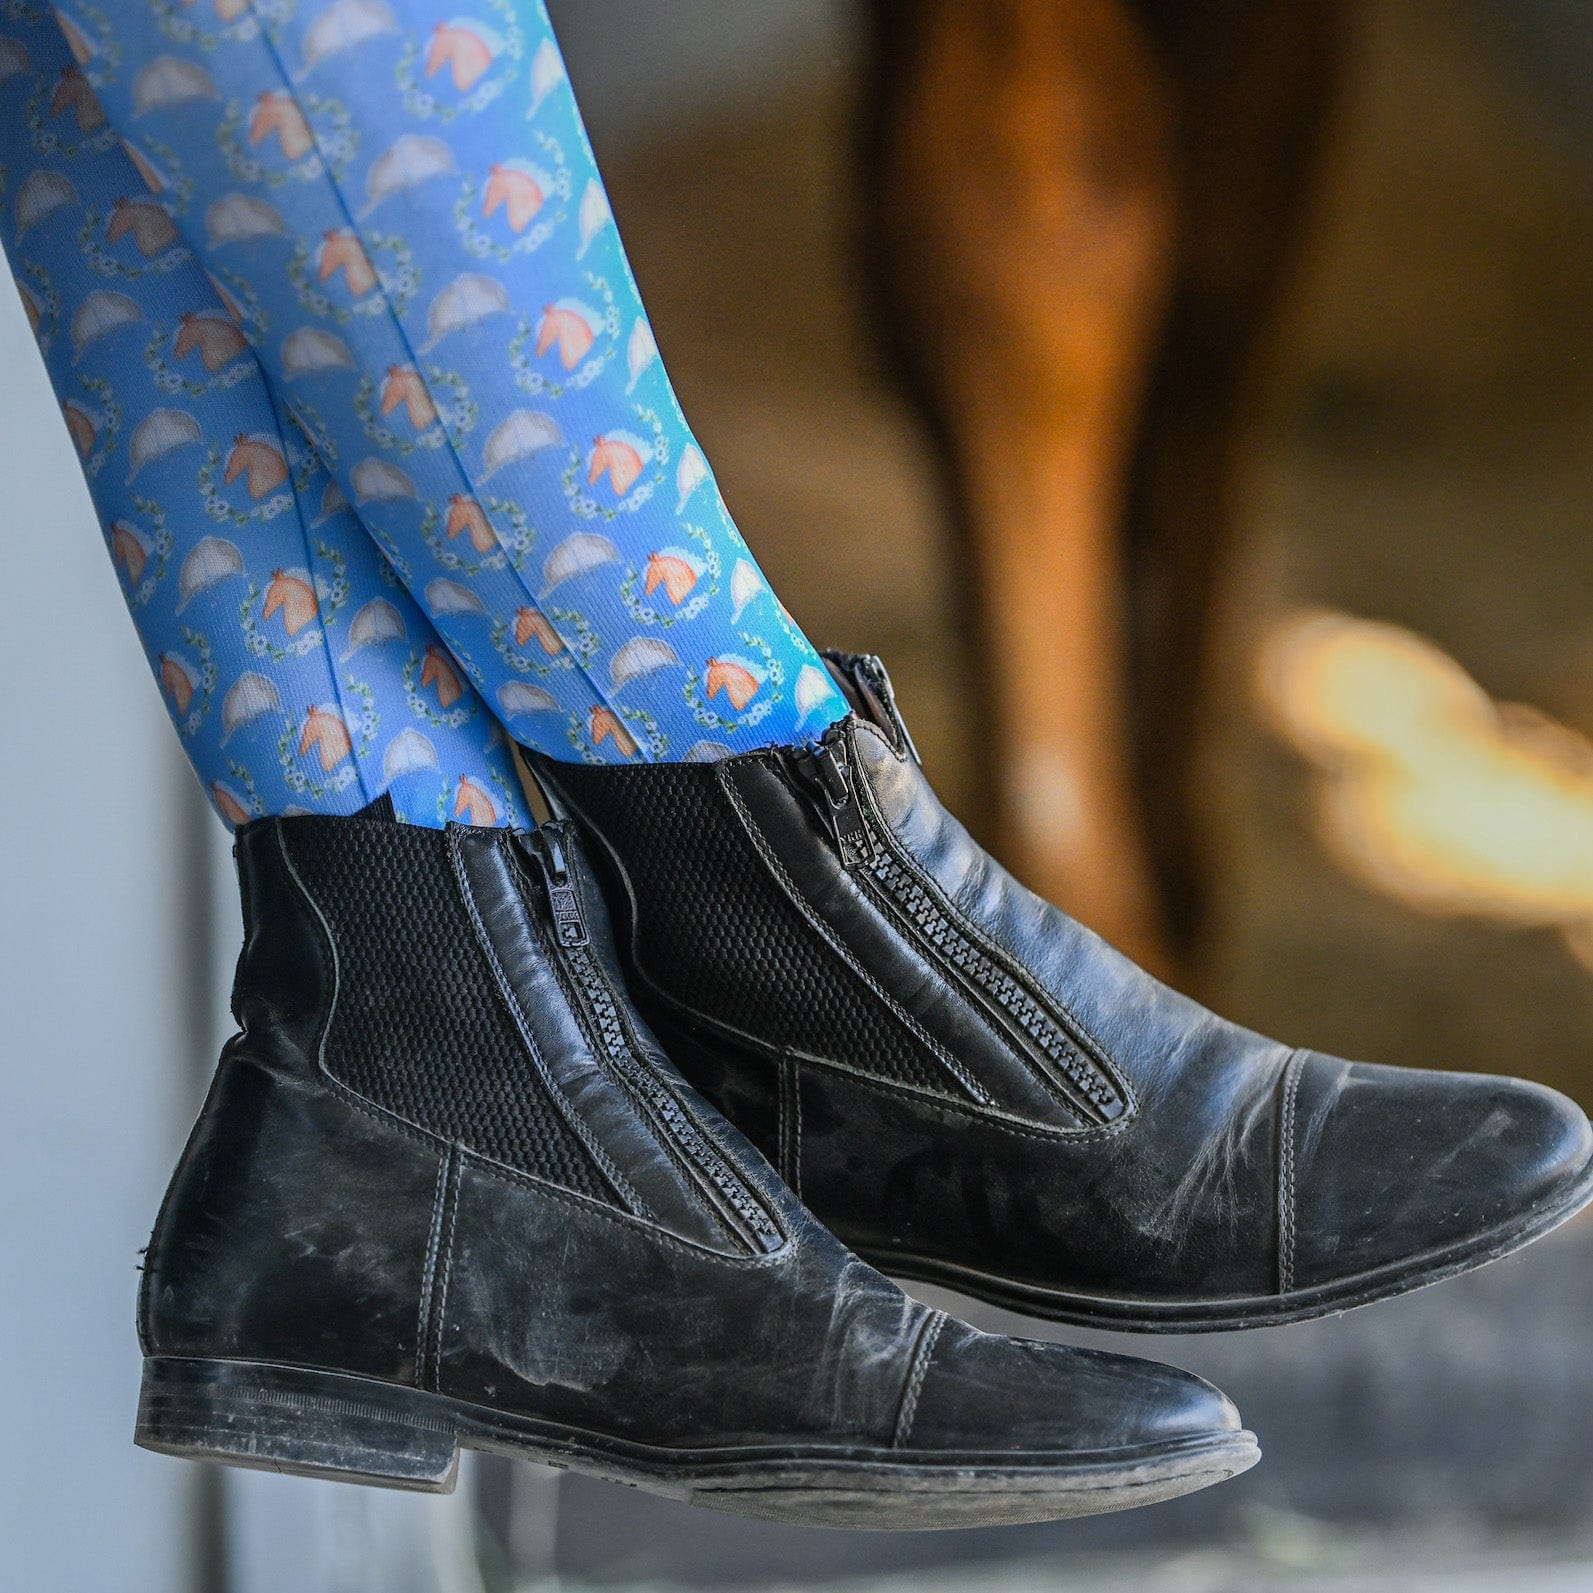 dreamers & schemers Pair & A Spare Derby Blue Pair & a Spare equestrian boot socks boot socks thin socks riding socks pattern socks tall socks funny socks knee high socks horse socks horse show socks